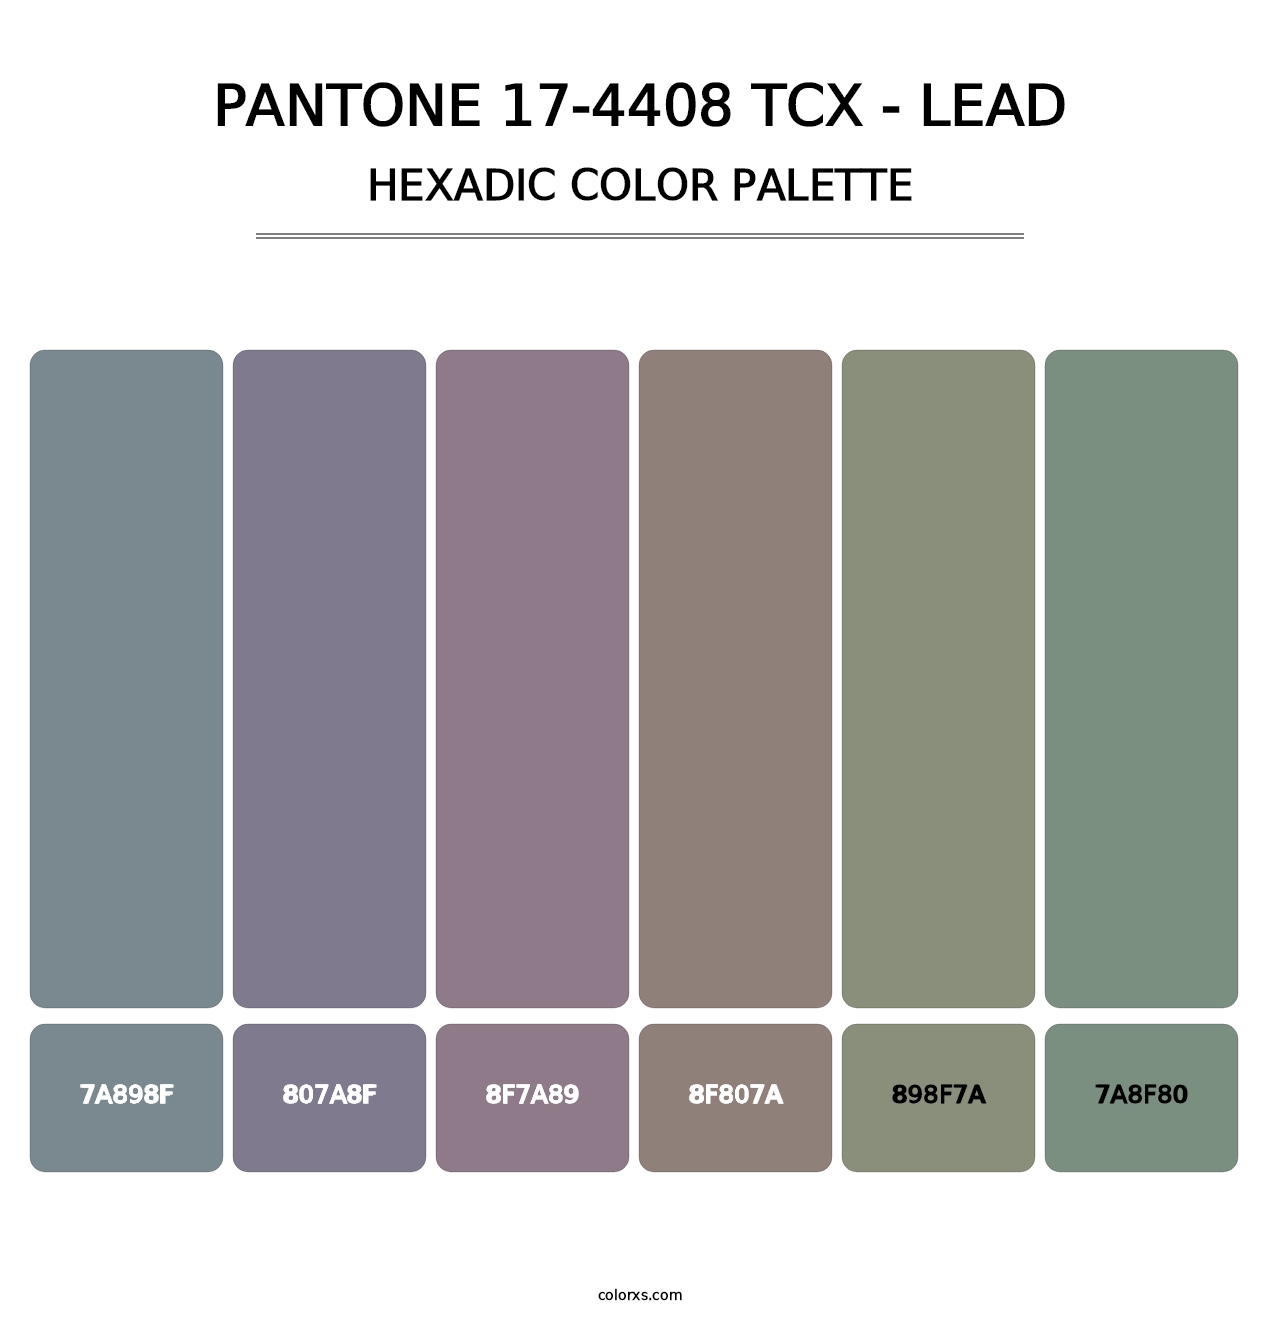 PANTONE 17-4408 TCX - Lead - Hexadic Color Palette